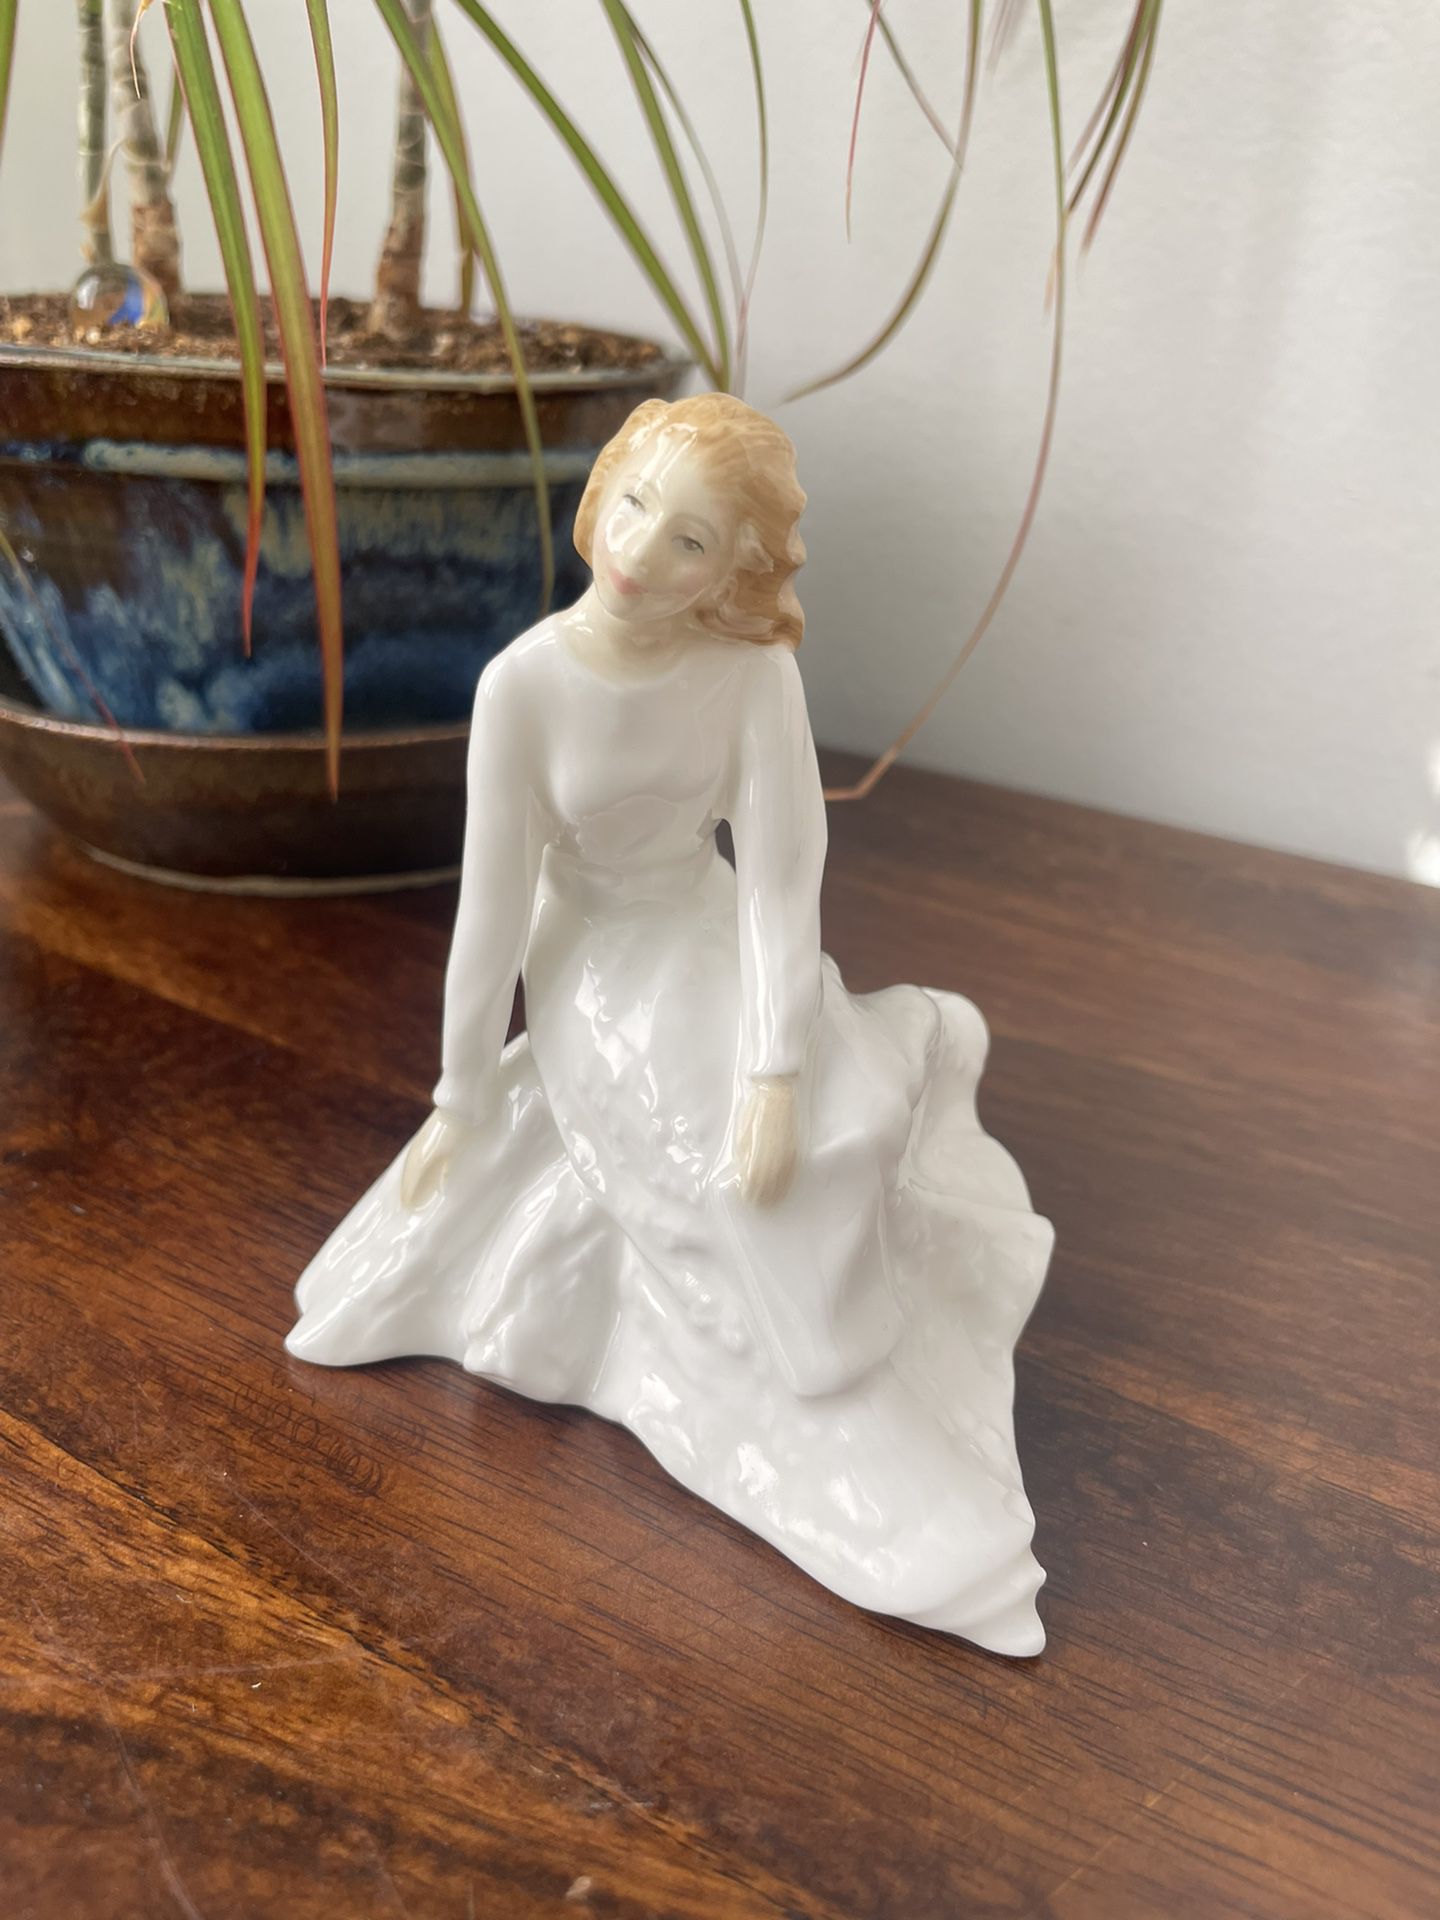 Royal Doulton Porcelain Figurine “Across The Miles”